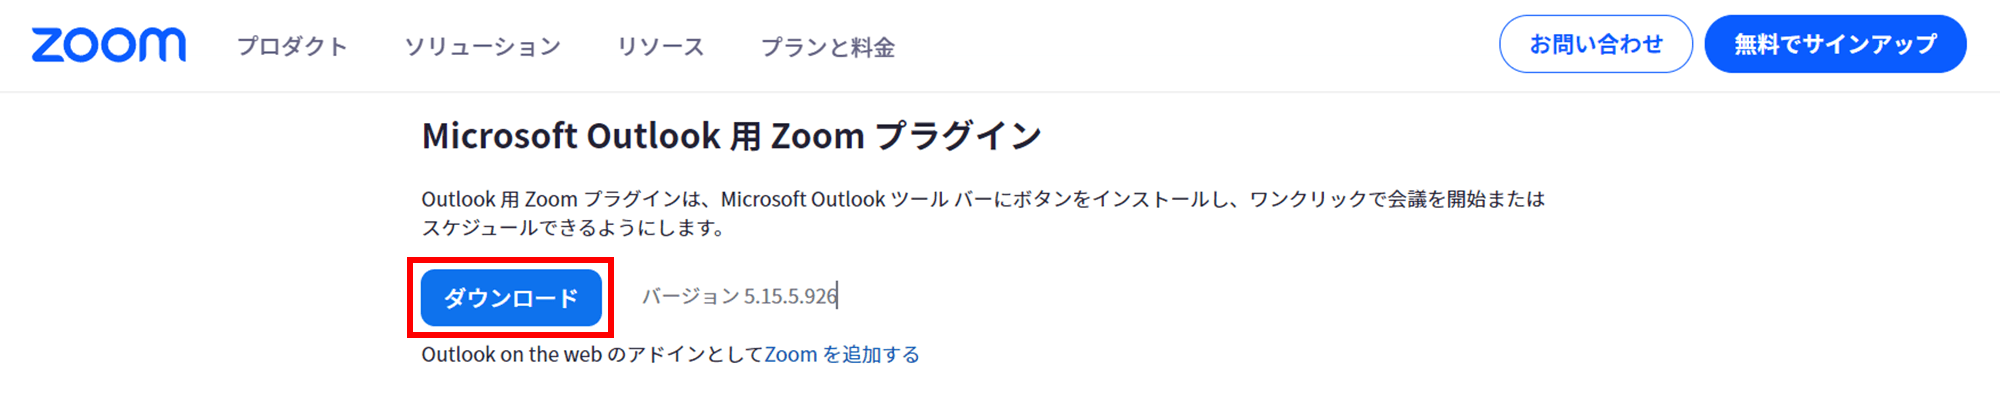 Microsoft Outlook用 Zoomプラグイン